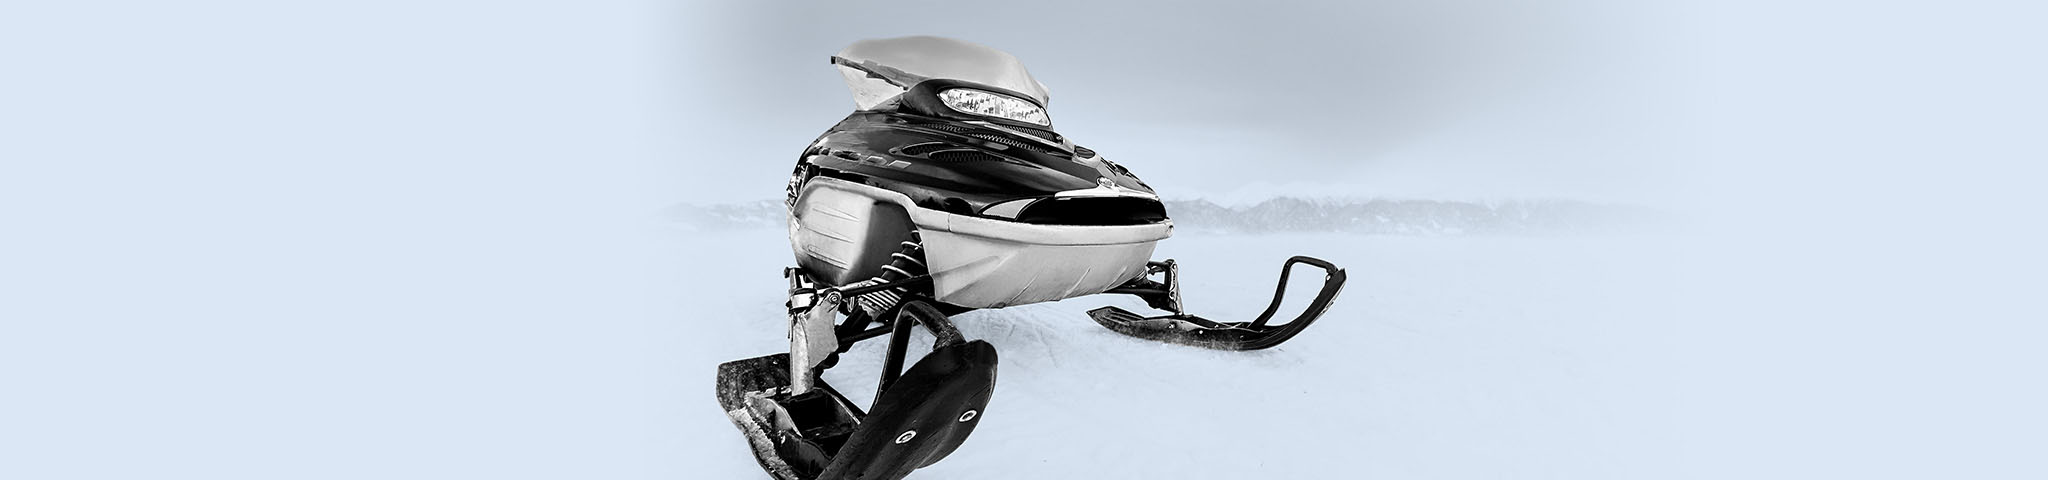 Snowmobile, ski-doo insurance